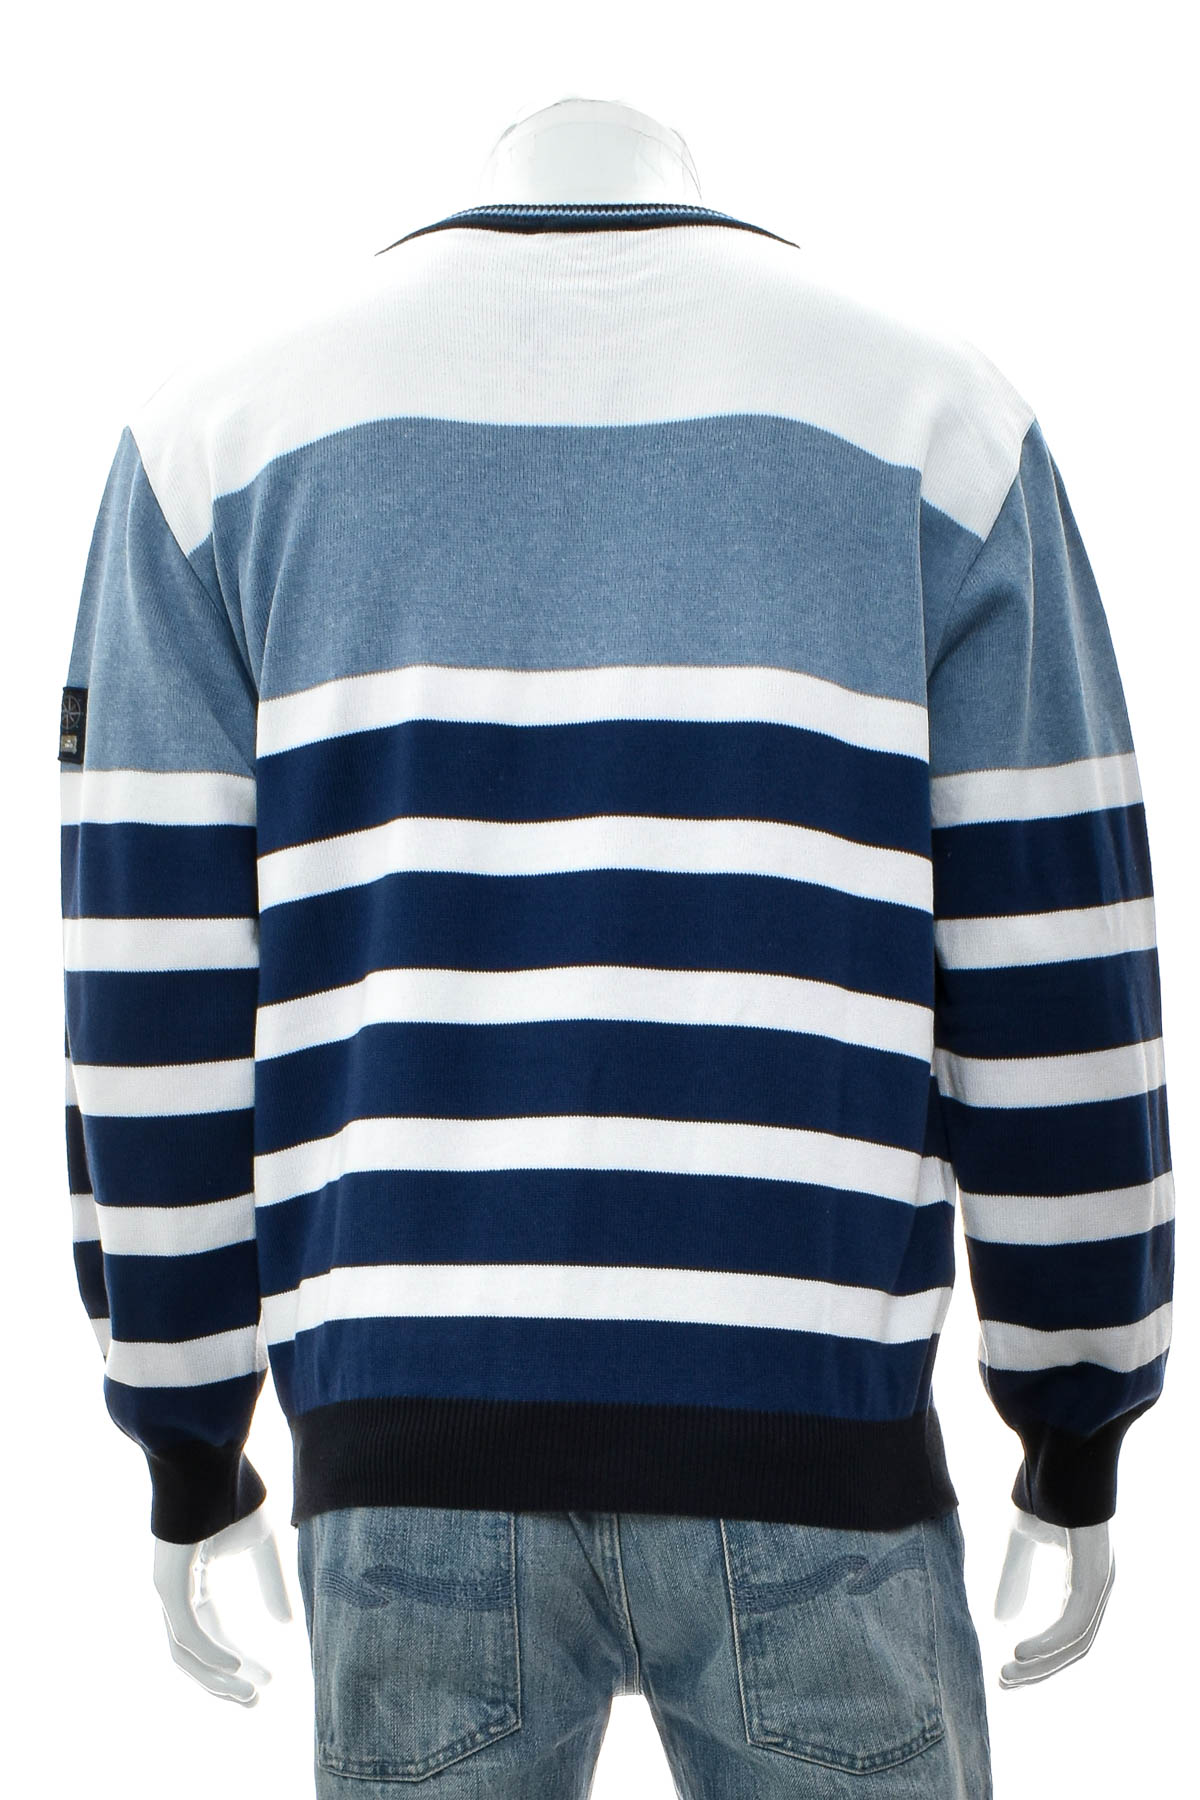 Men's sweater - Babista - 1